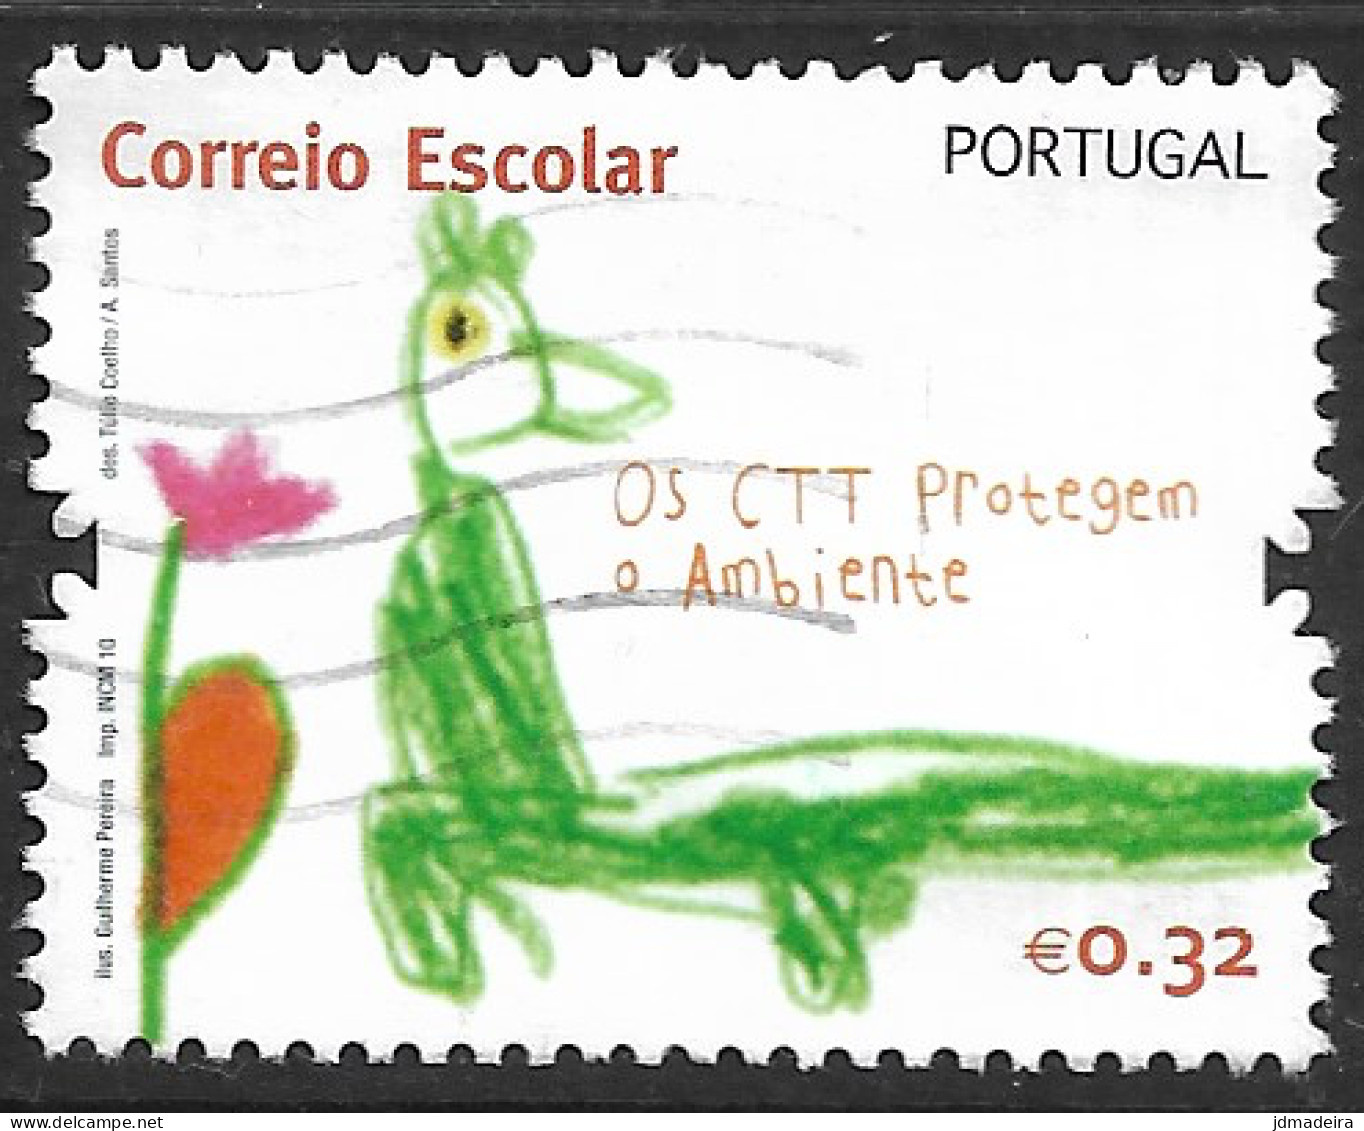 Portugal – 2010 School Mail 0,32 Used Stamp - Oblitérés